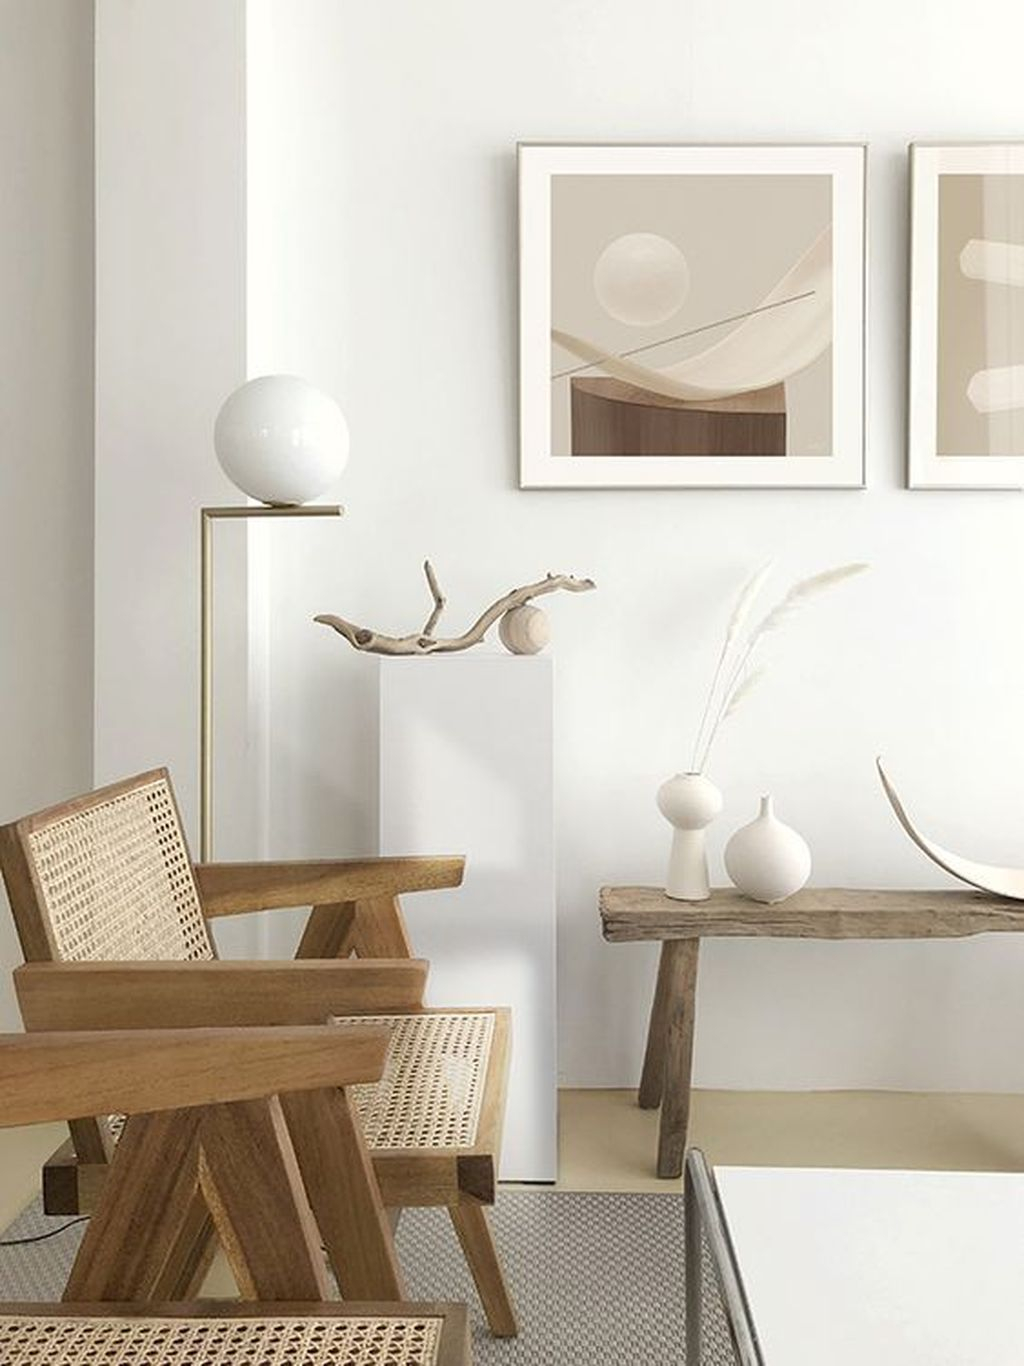 Minimalist Home Interior Design Ideas With A Smart Living Concept17